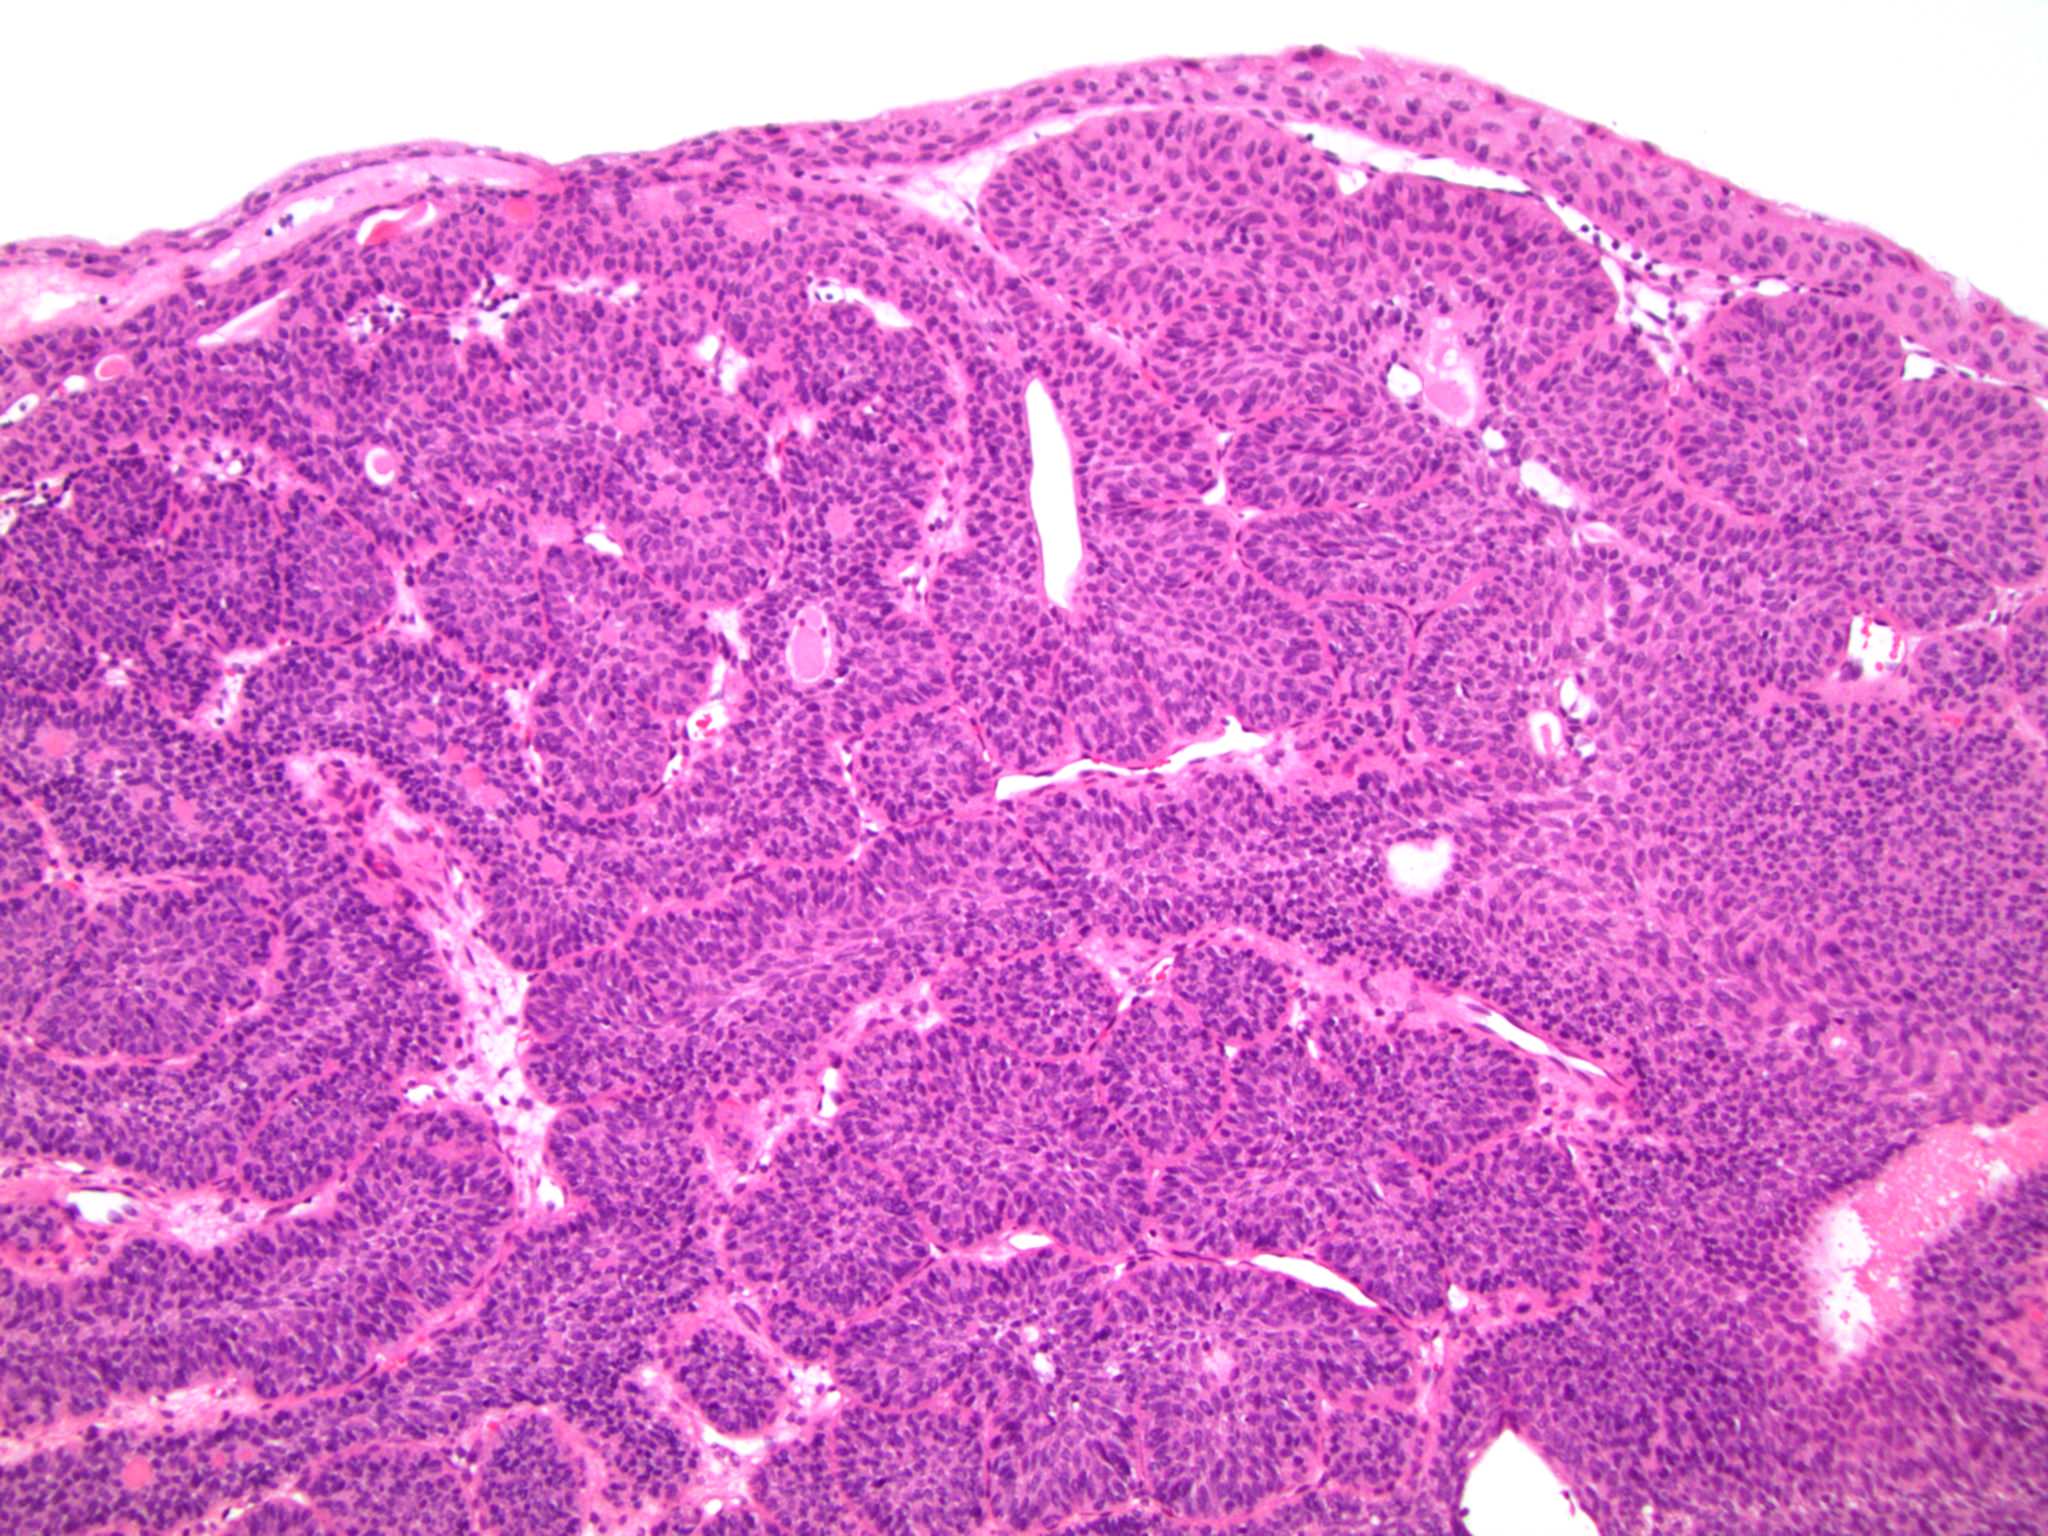 papiloma urotelial pathology outlines